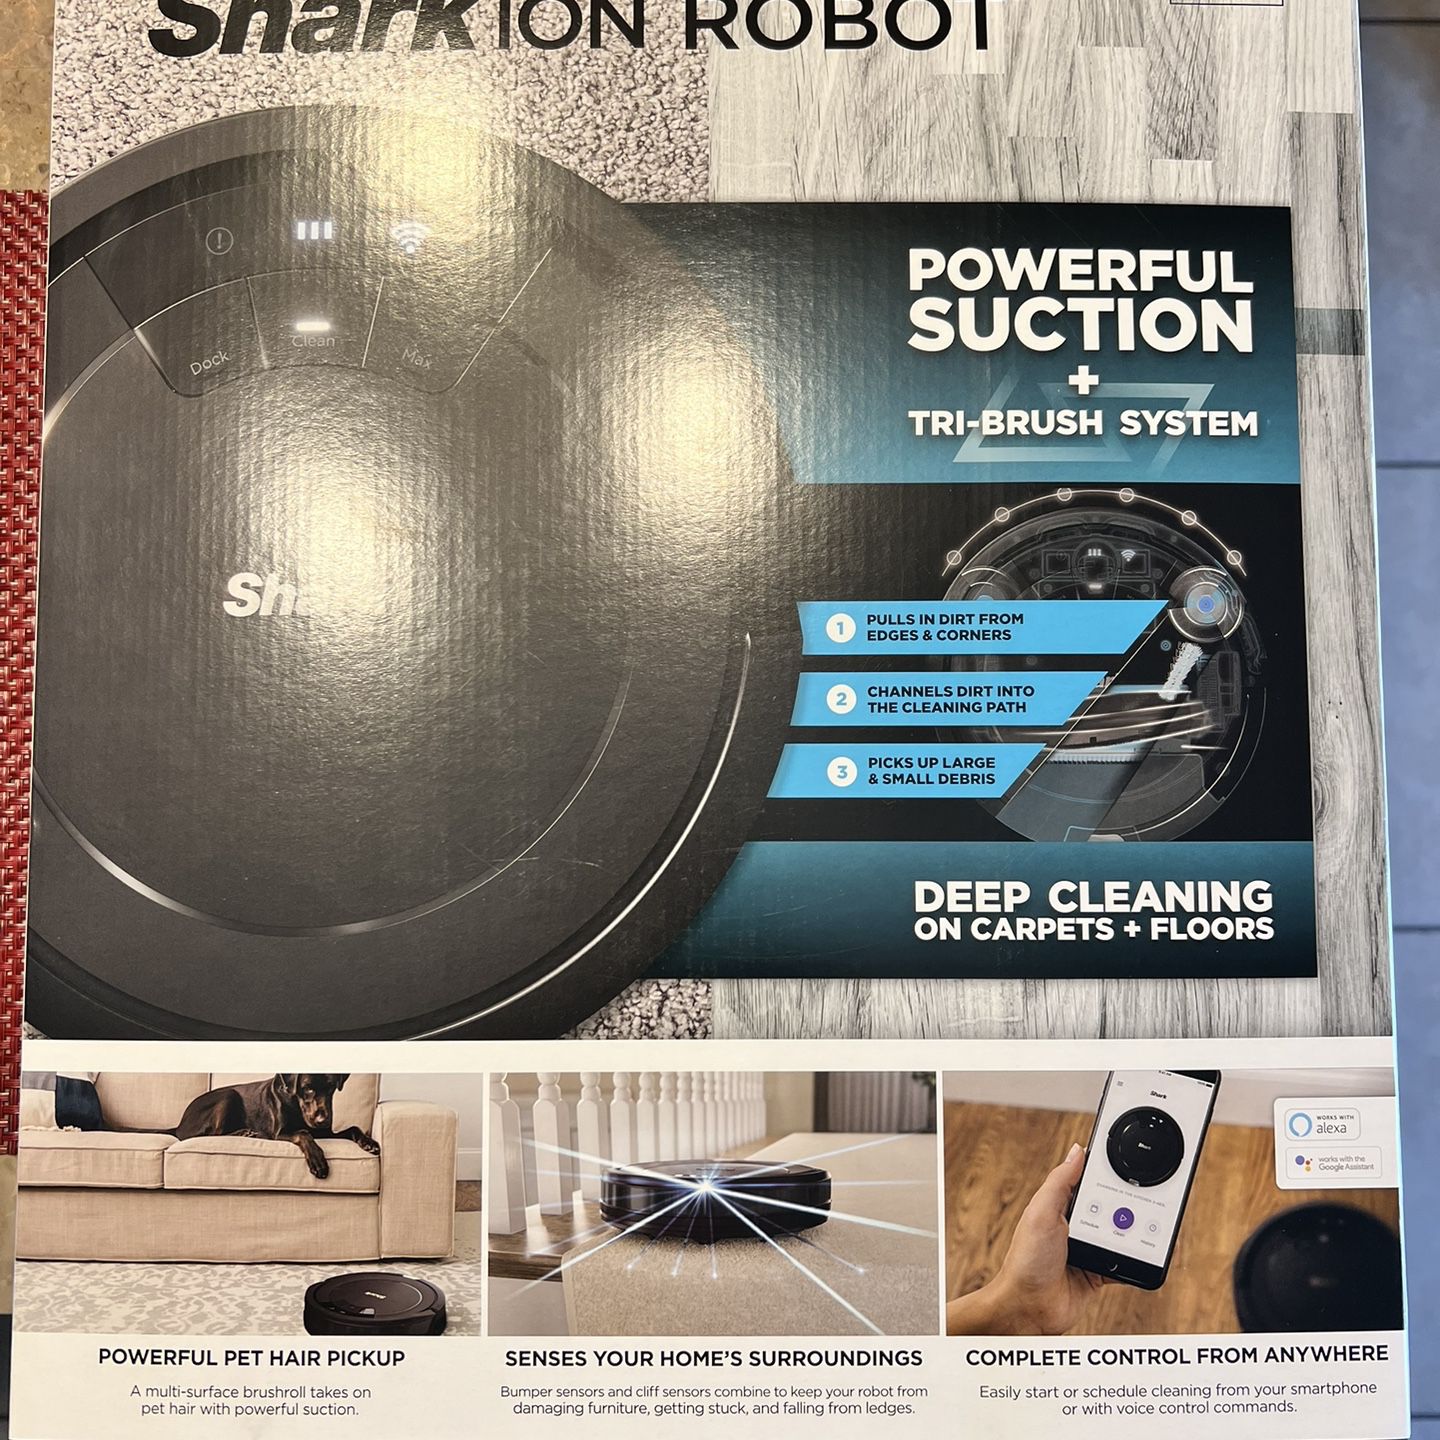 Shark Ion Robot Vacuum 